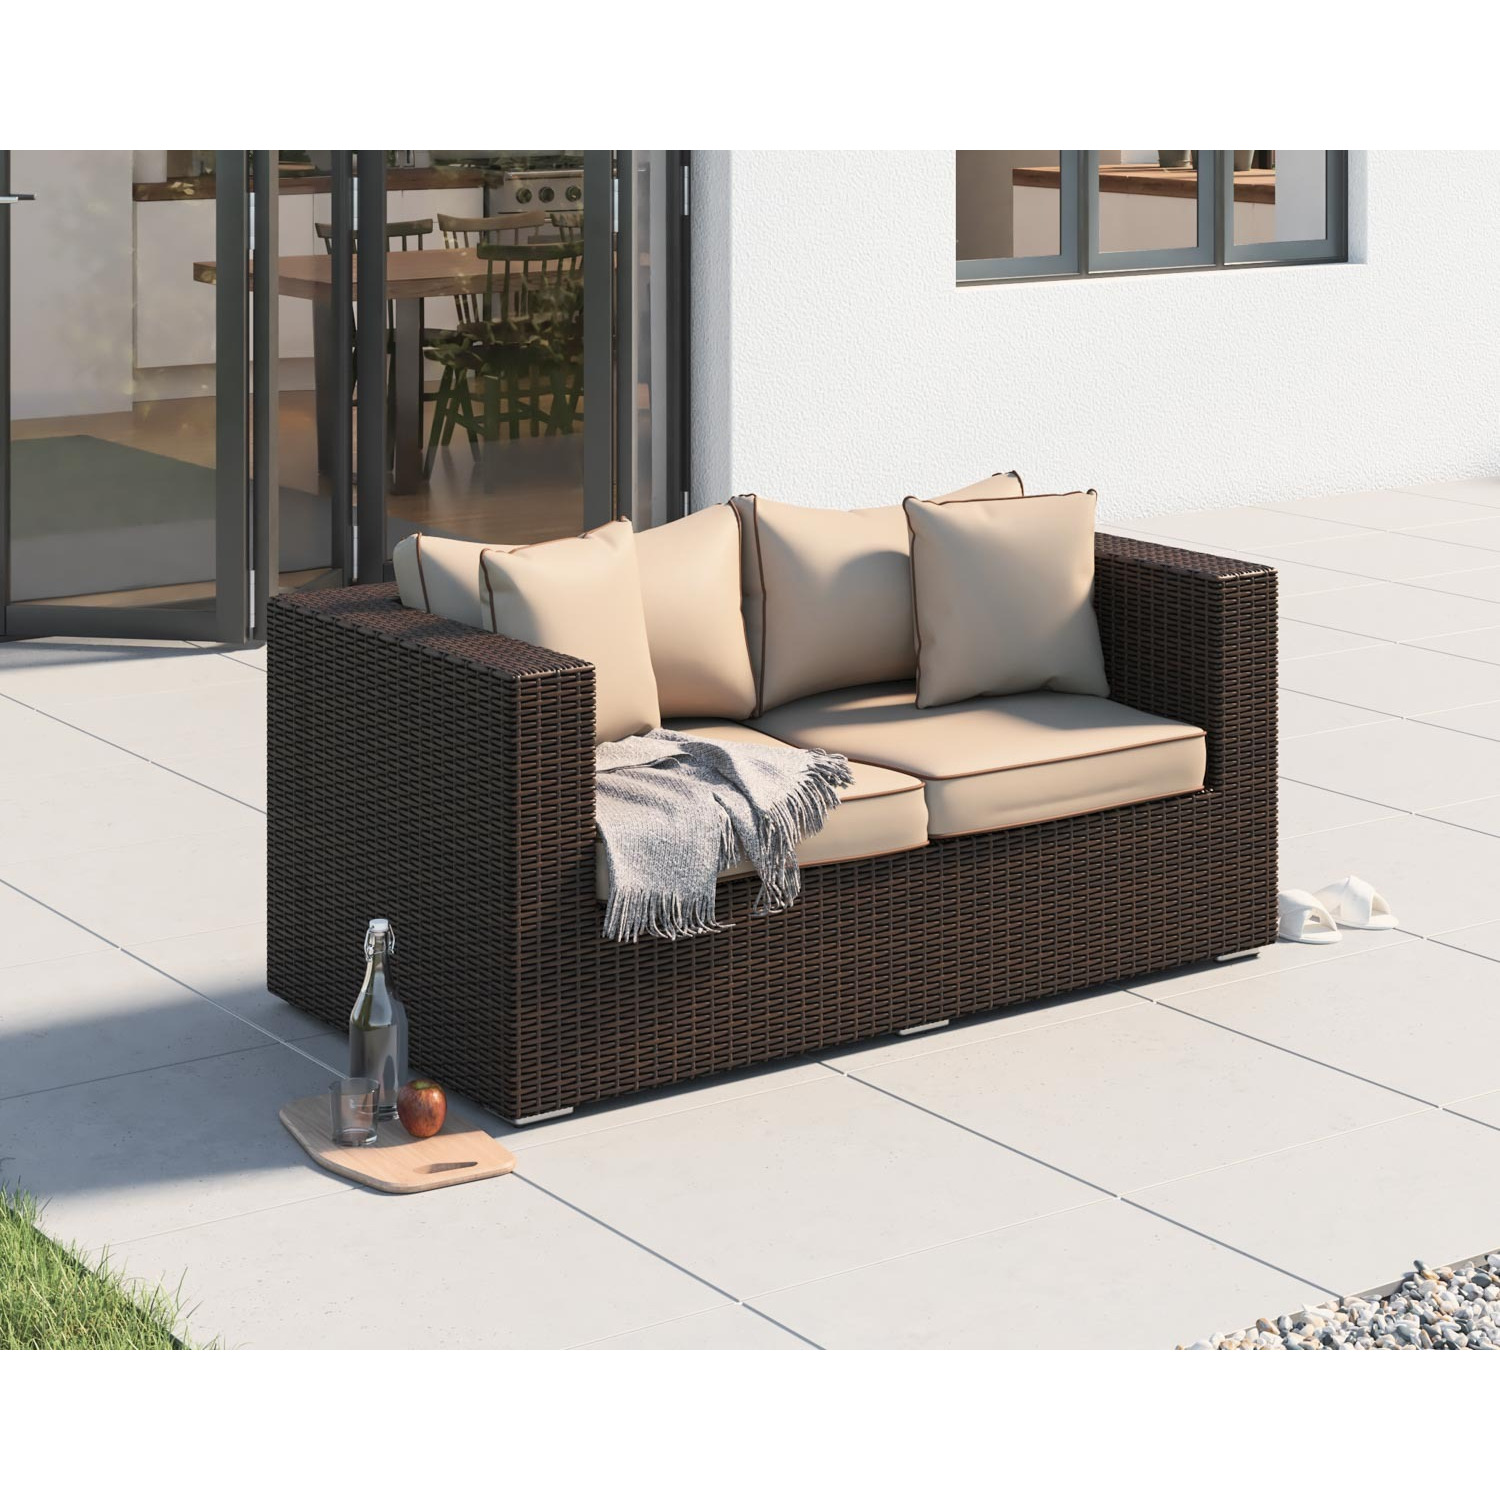 2 Seater Rattan Garden Sofa in Brown - Ascot - Rattan Direct